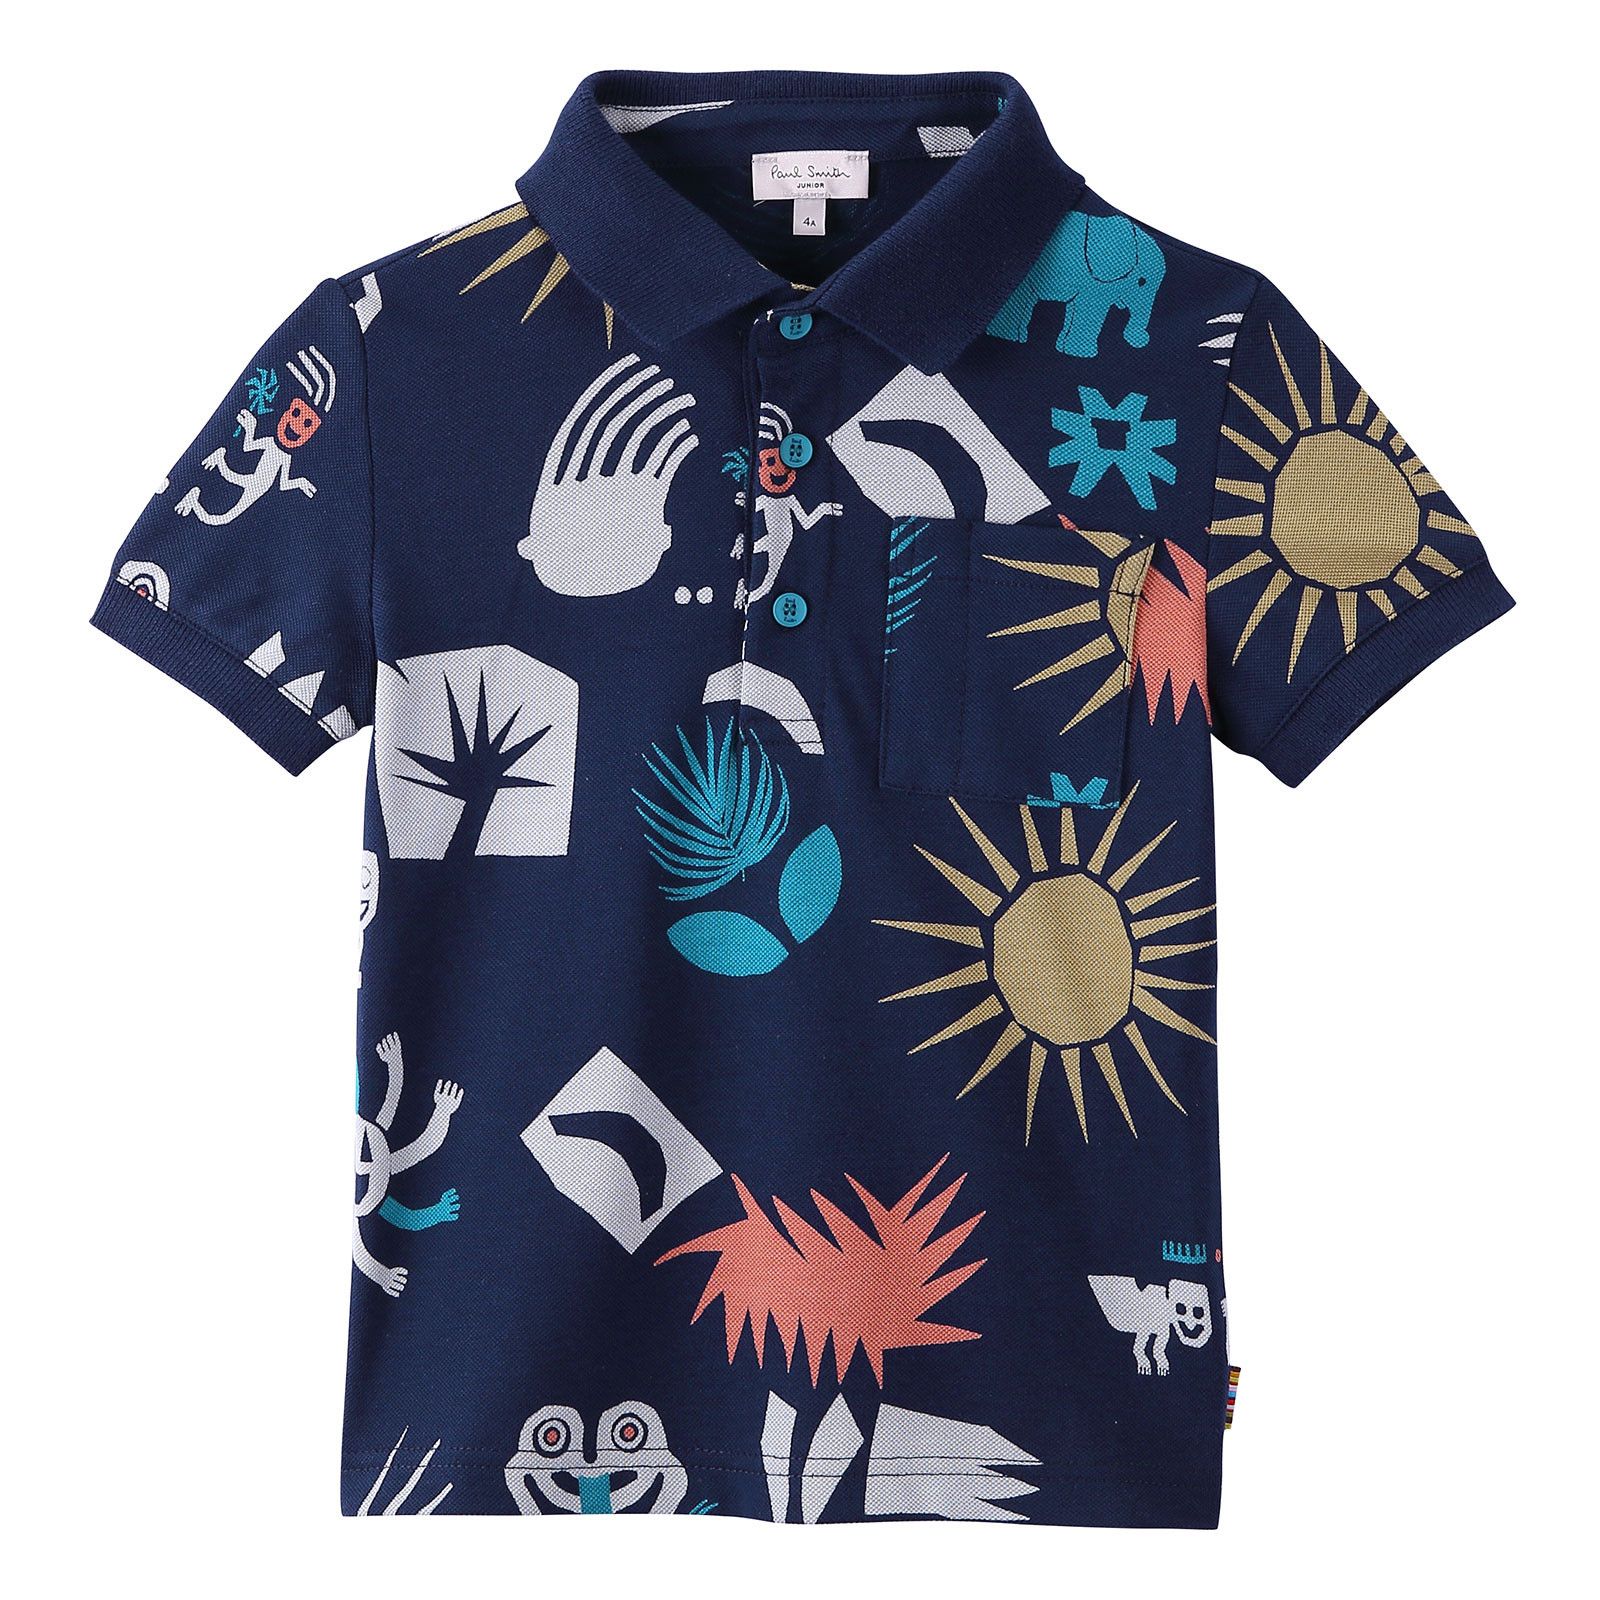 Boys Navy Blue Cotton Polo Shirt With Fancy Pattern Print - CÉMAROSE | Children's Fashion Store - 1